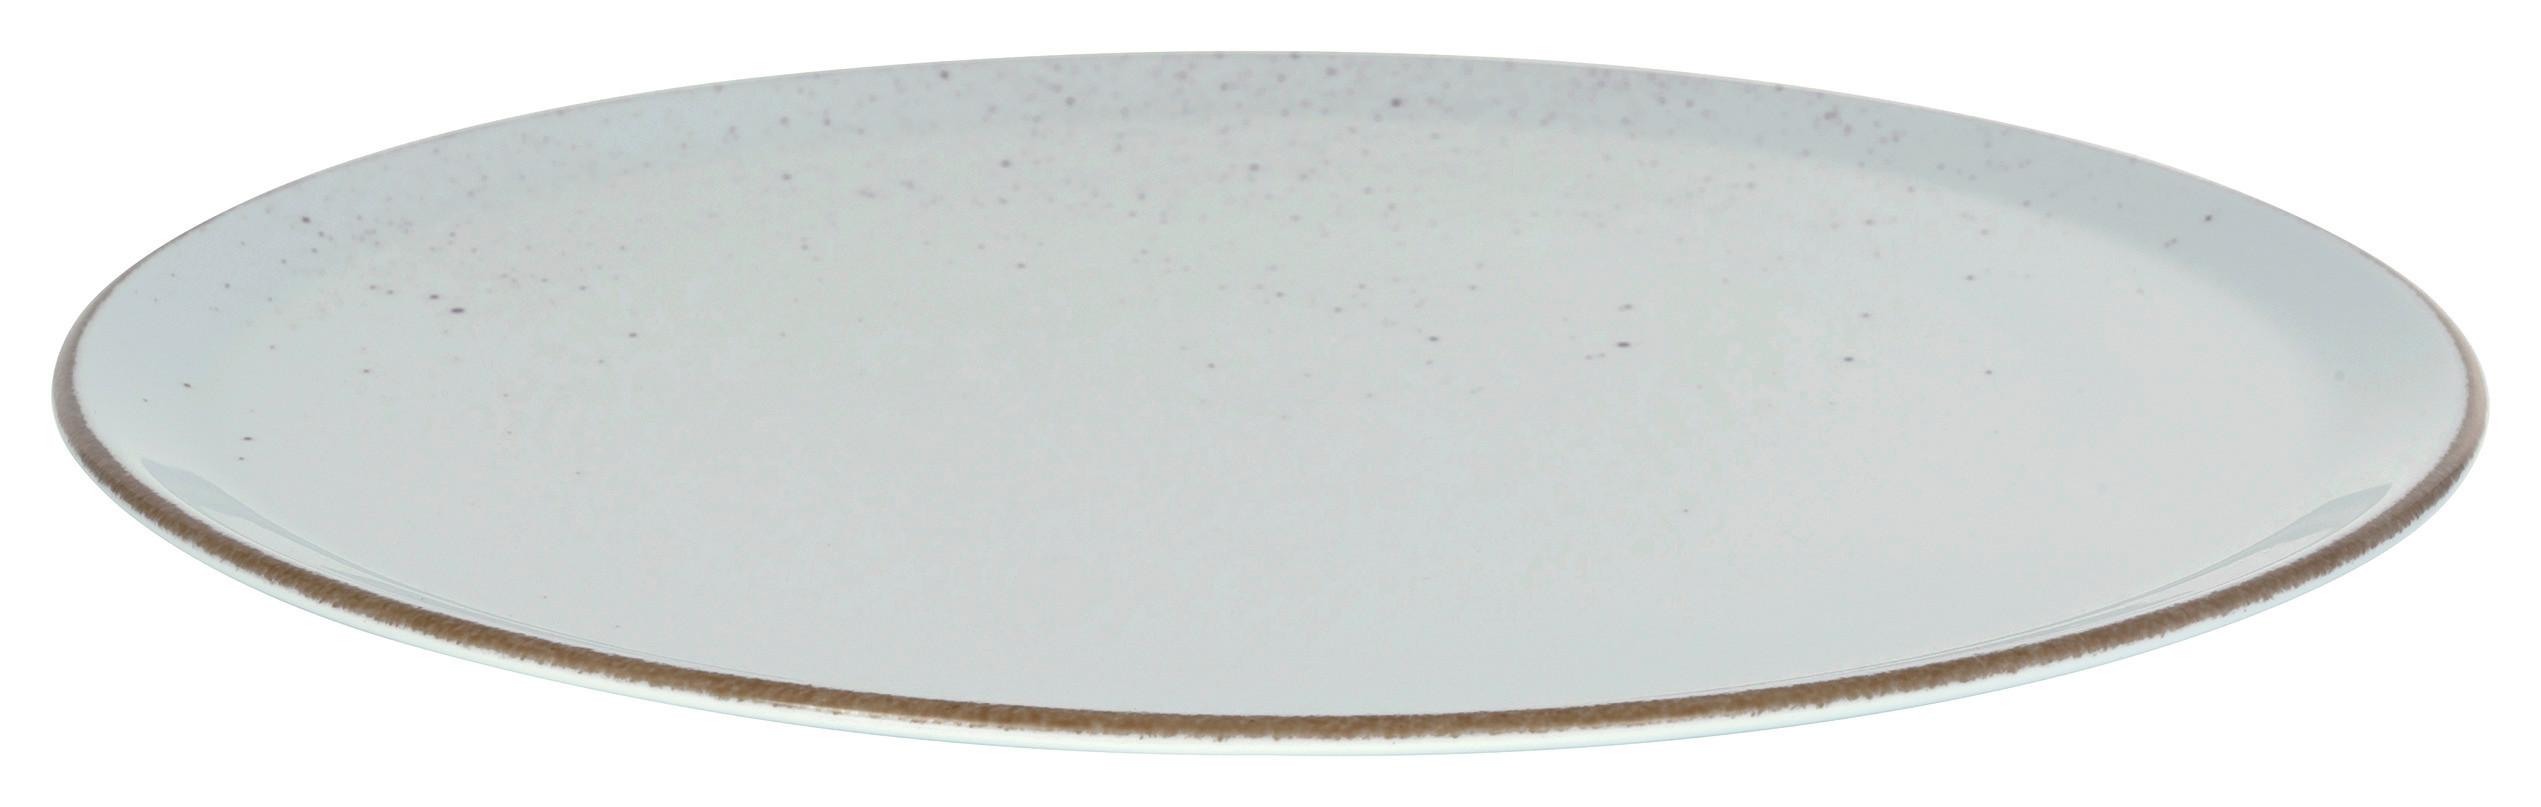 Farfurie pentru pizza Capri - alb, Modern, ceramică (33/33/2cm) - Premium Living